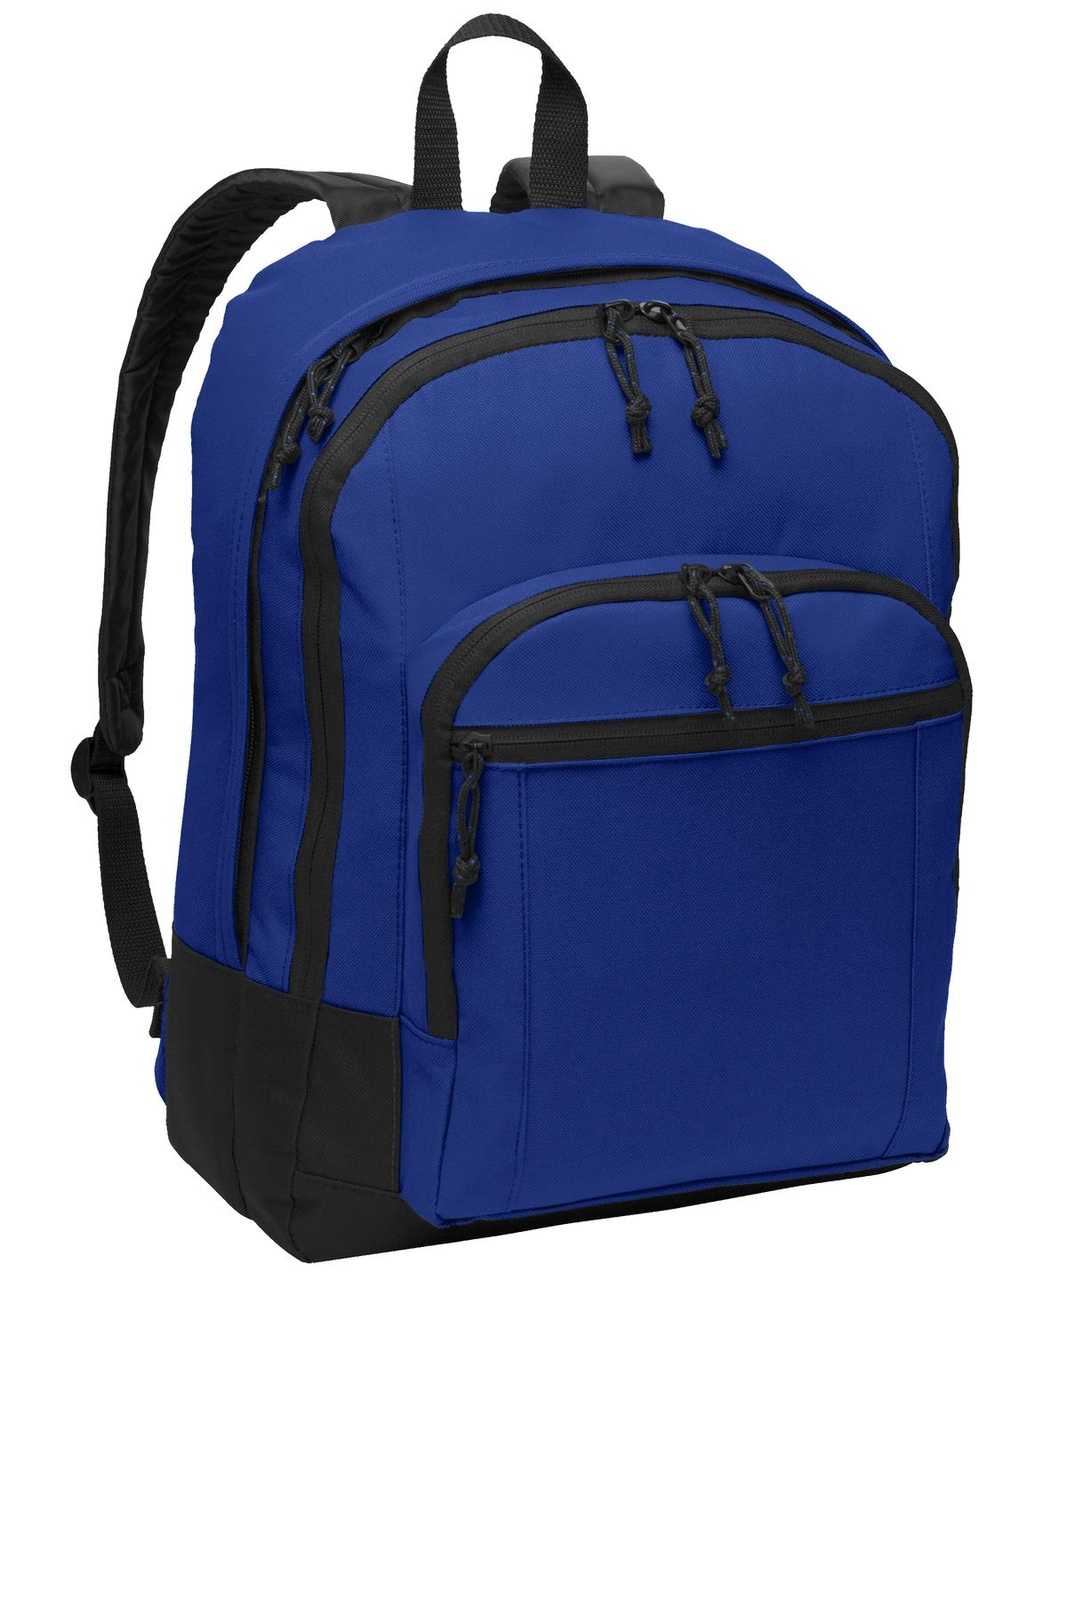 Port Authority BG204 Basic Backpack - Twilight Blue - HIT a Double - 1